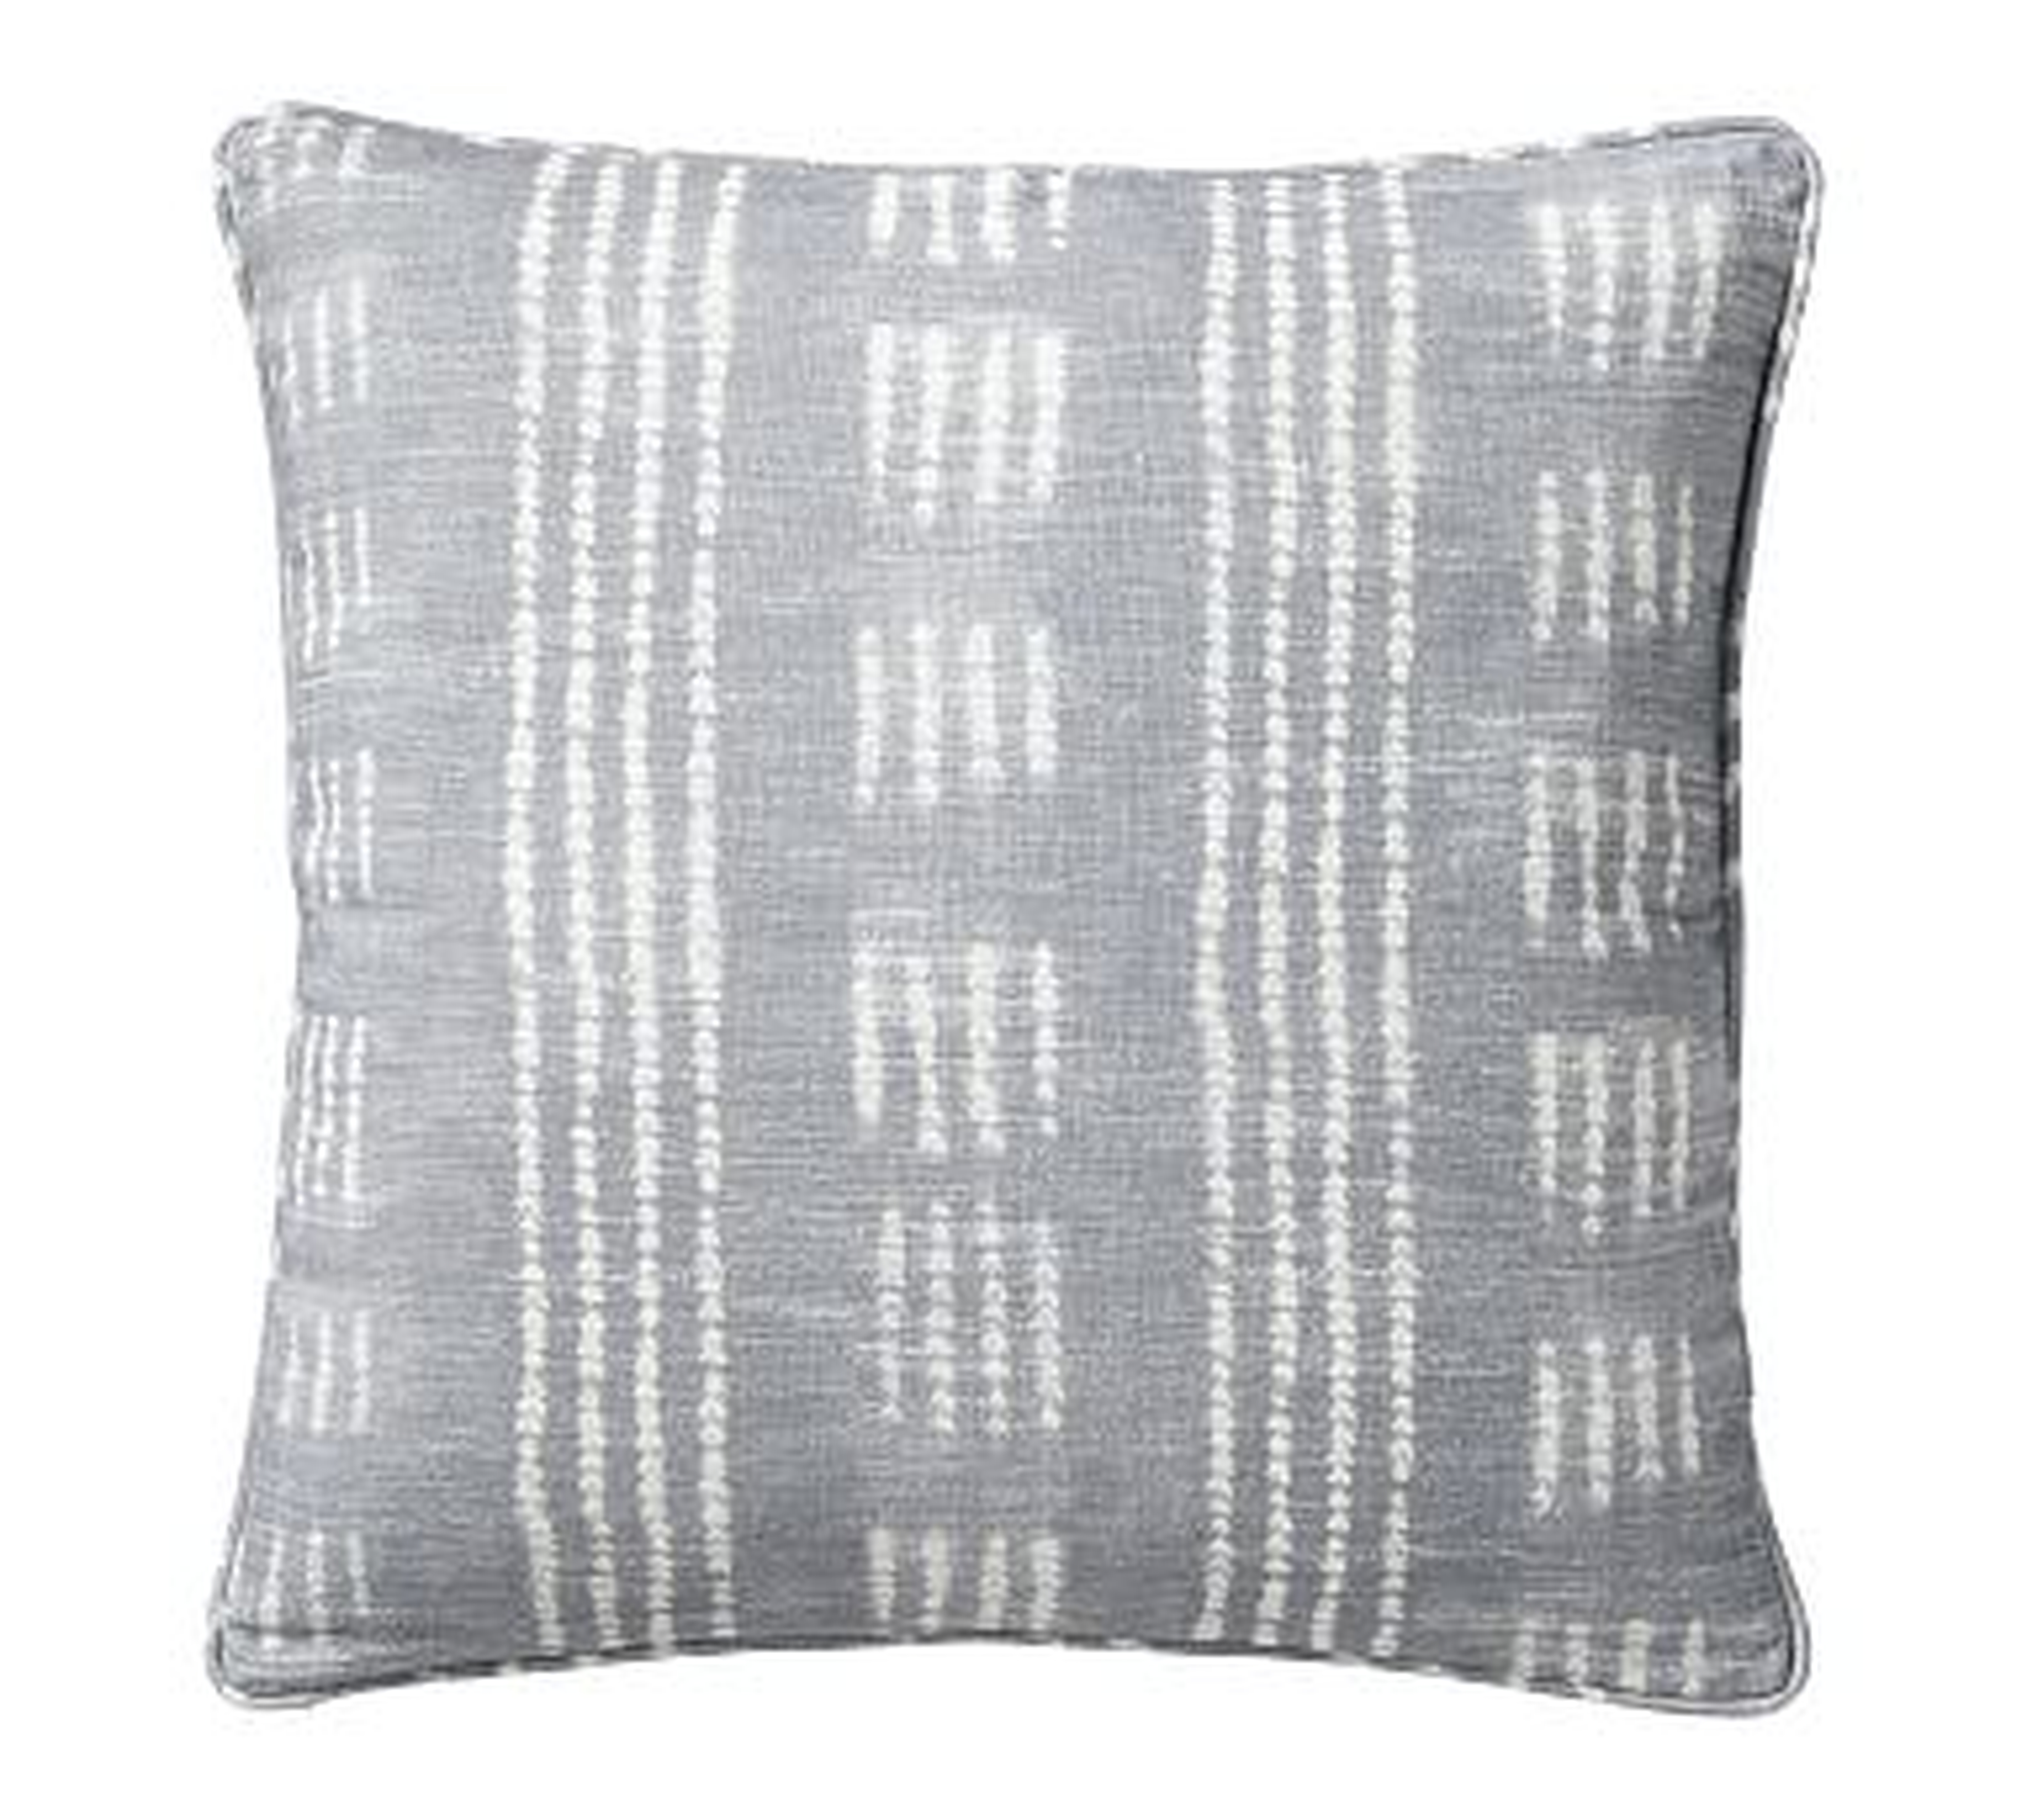 Shibori Dot Pillow, Gray, 20" x 20" - Pottery Barn